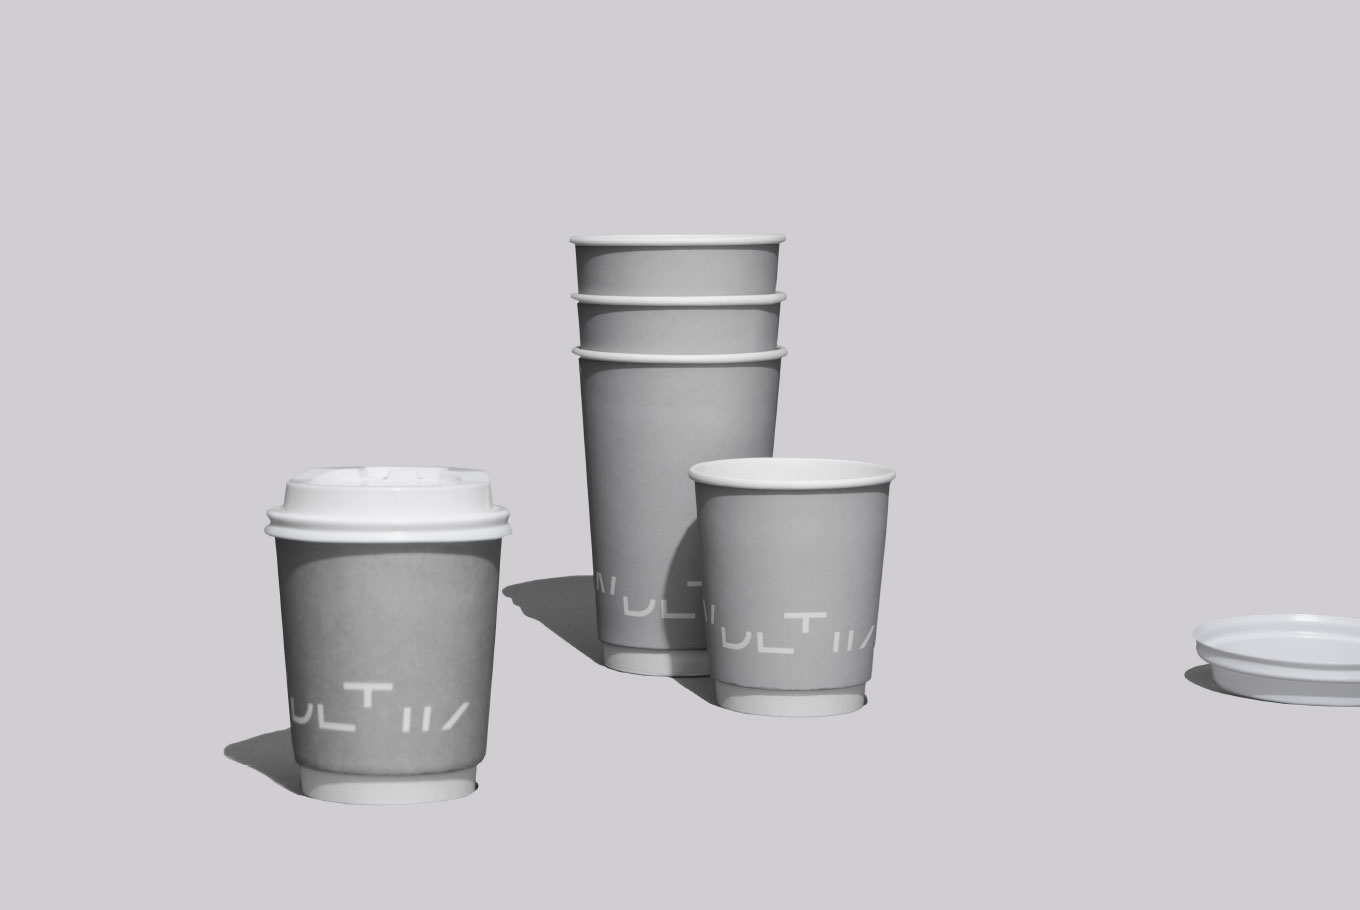 Coffee cups with WDLT117 branding